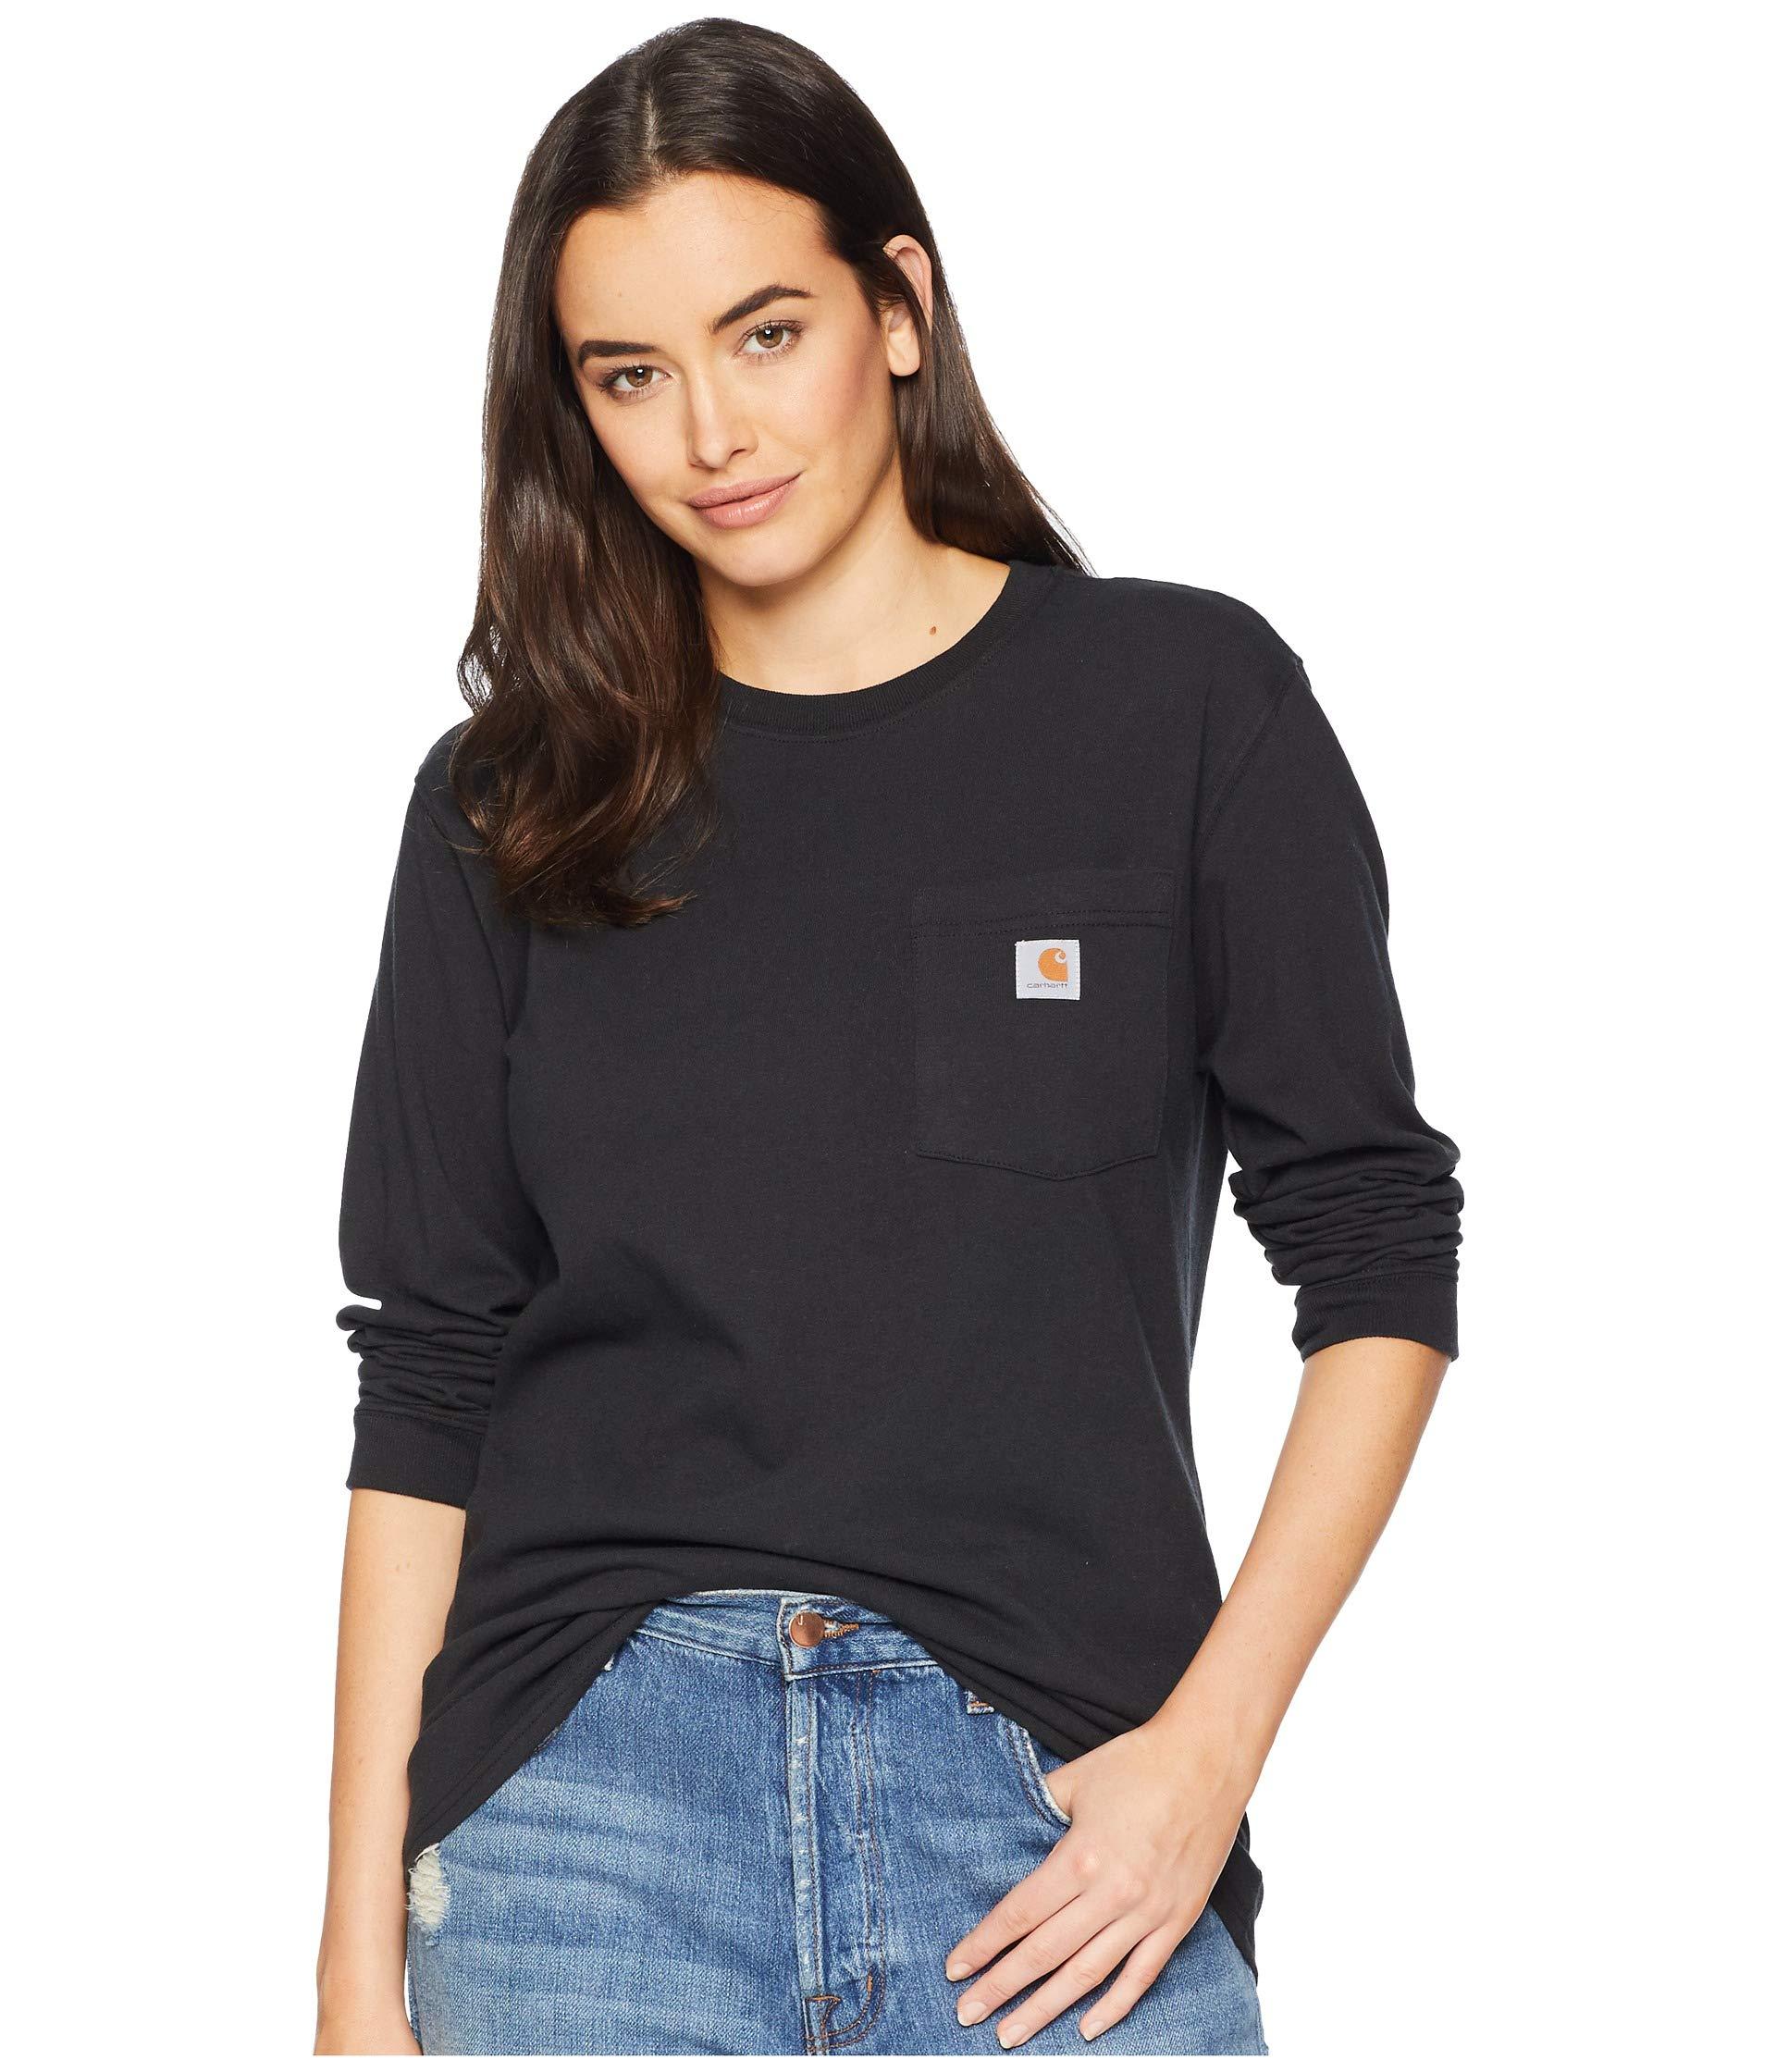 Carhartt Cotton Wk126 Workwear Pocket Long Sleeve T-shirt in Black - Lyst